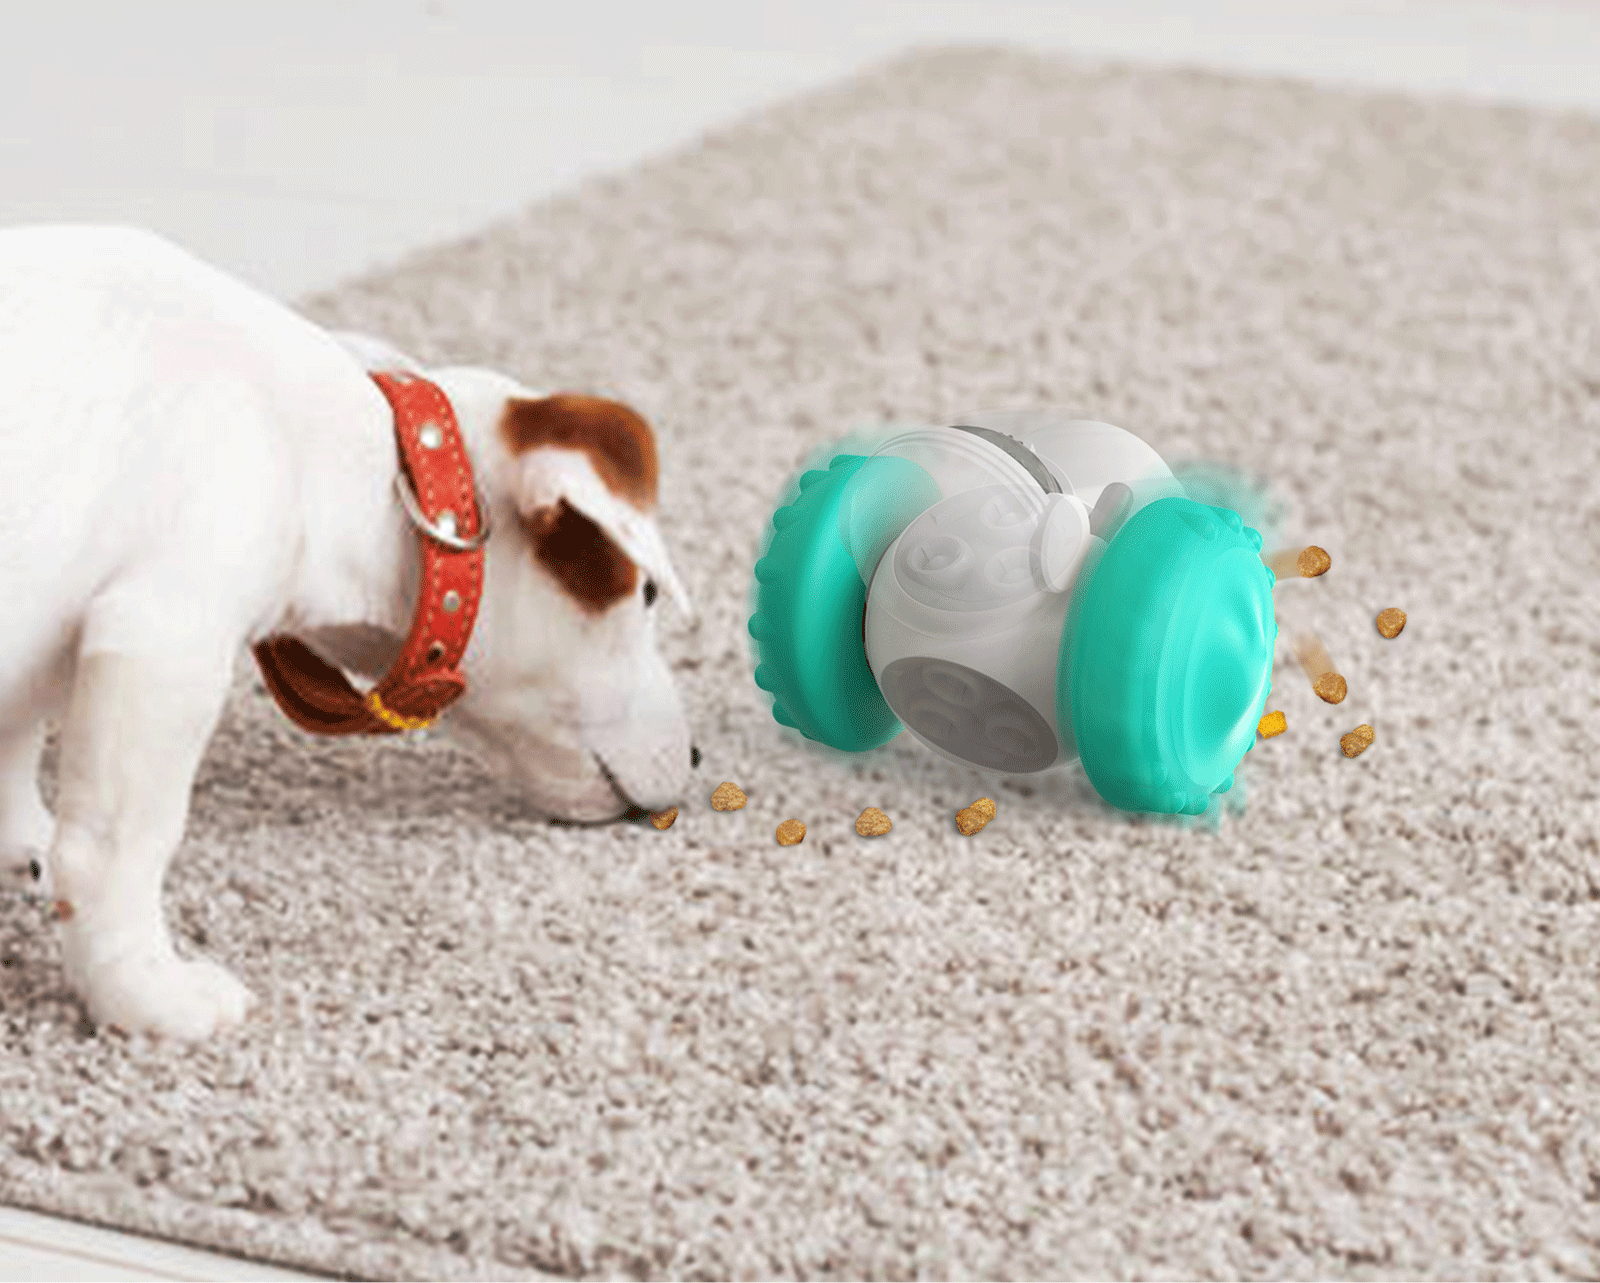 Pet Supplies : Milk-Bone Active Treat Tumbler, Interactive Dog Treat  Dispensing Dog Toy for Small Treats 